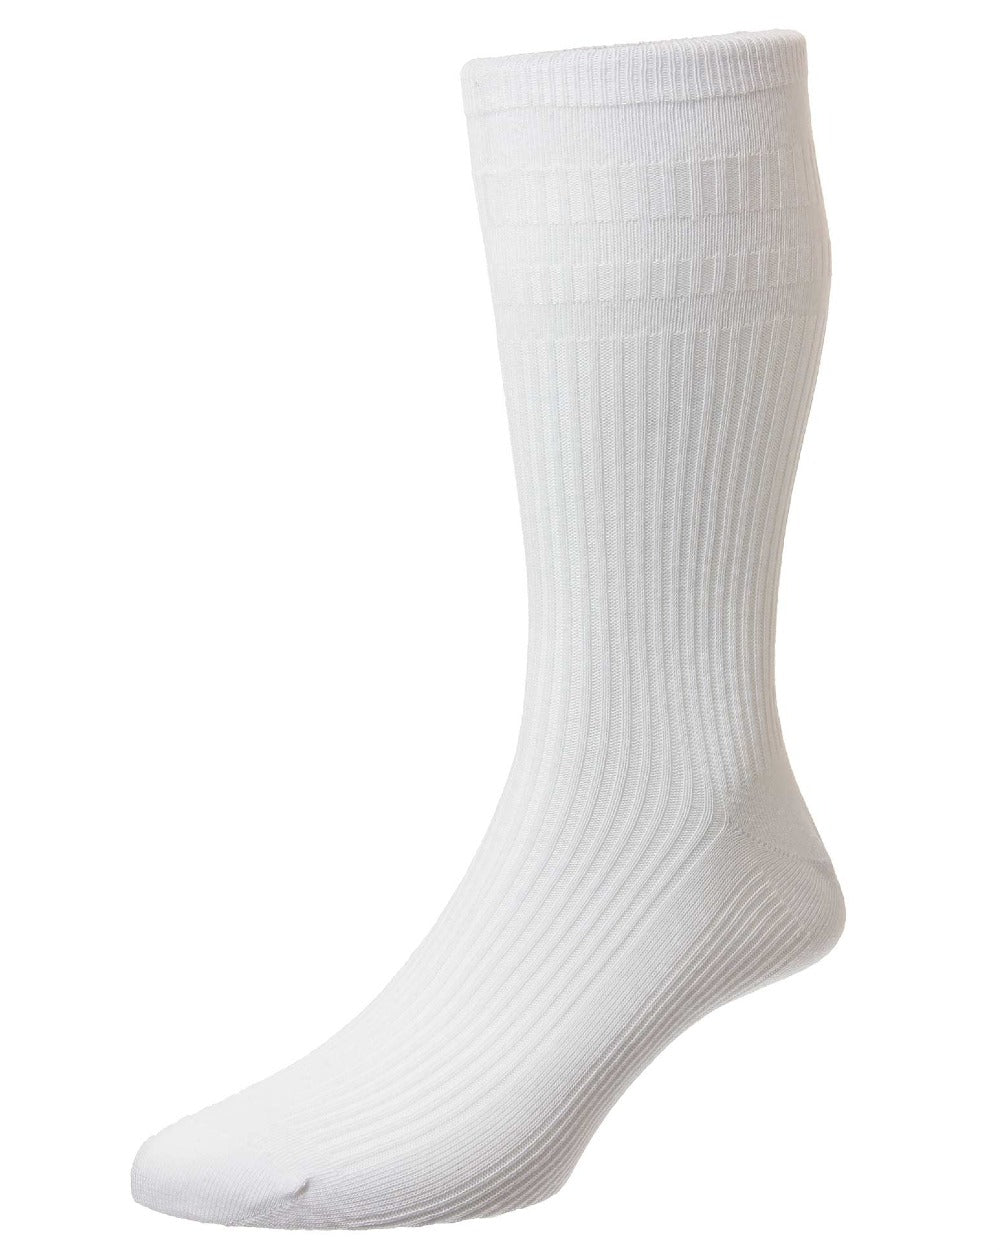 HJ Hall Original Cotton Soft Top Socks in White  